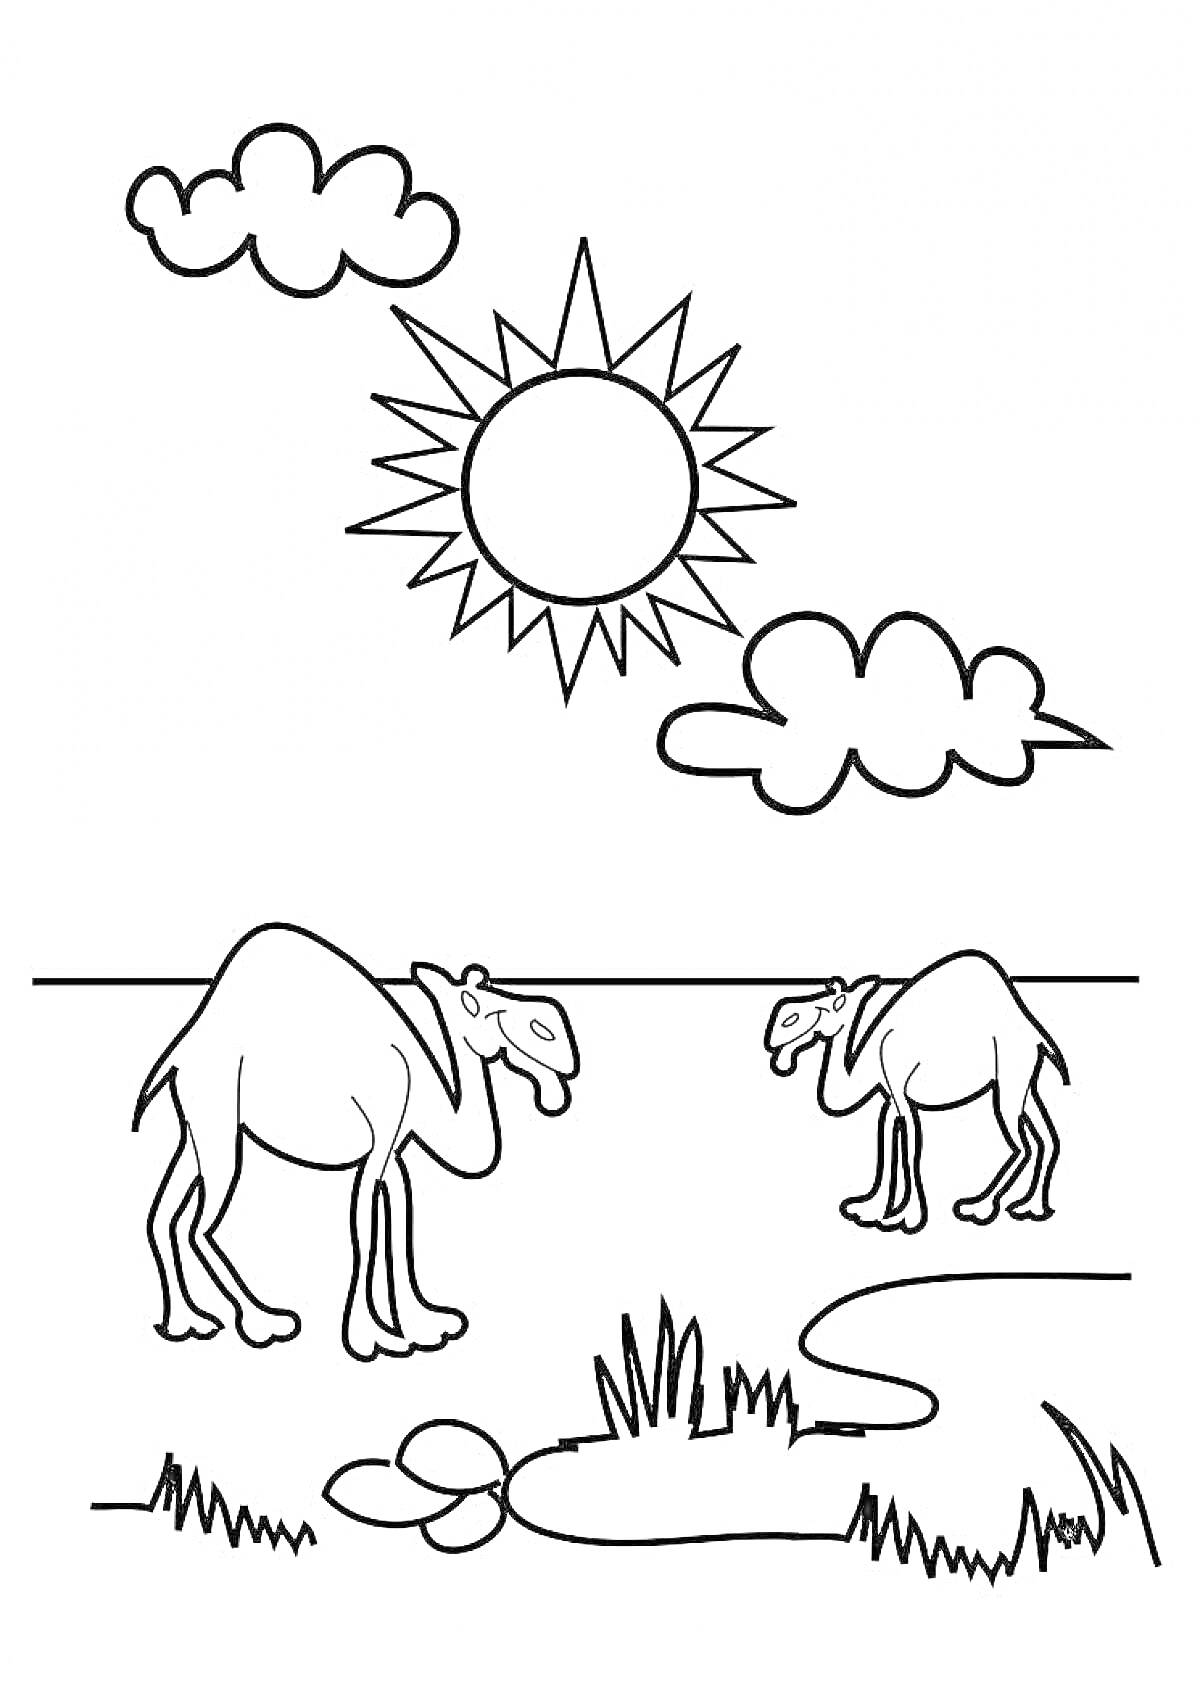 Два верблюда в пустыне, солнце в небе, облака, трава, ручей